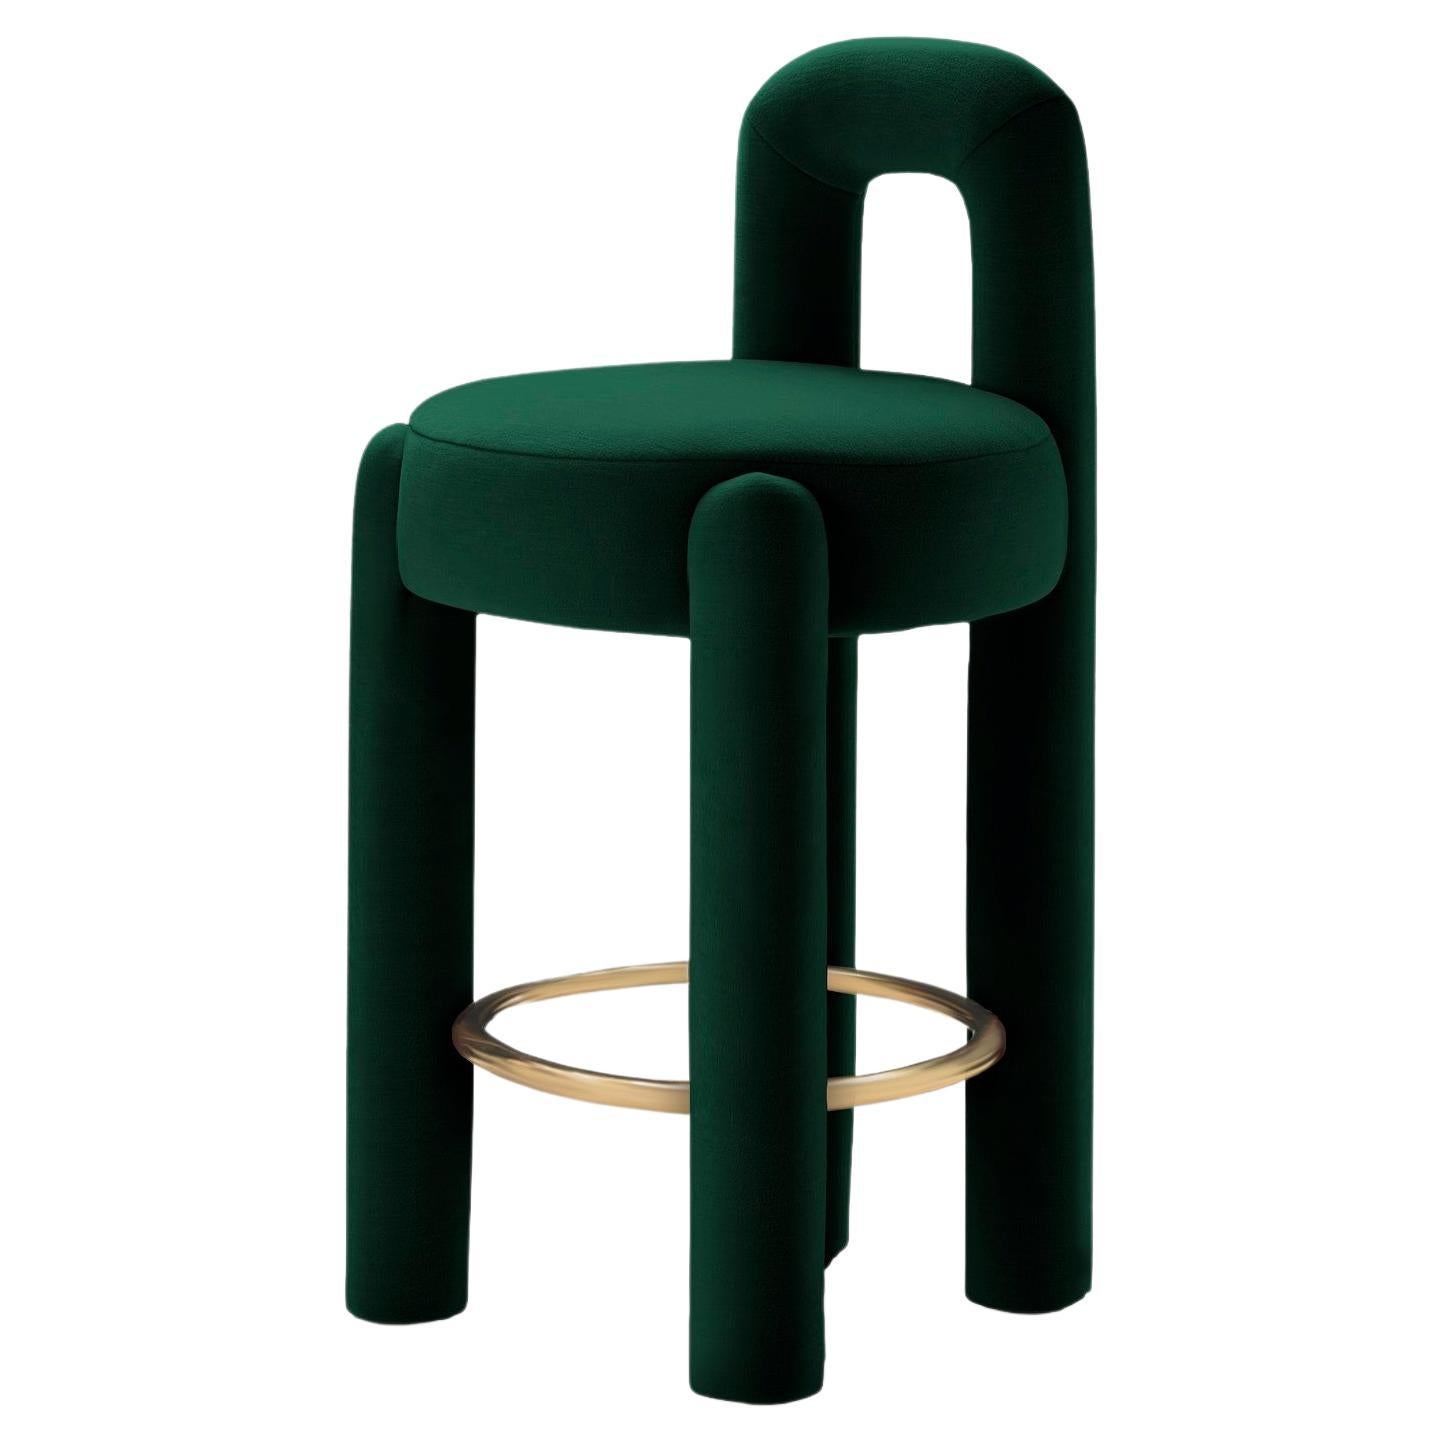 DOOQ! Organic Modern Marlon Bar Chair in Teal Kvadrat by P. Franceschini For Sale